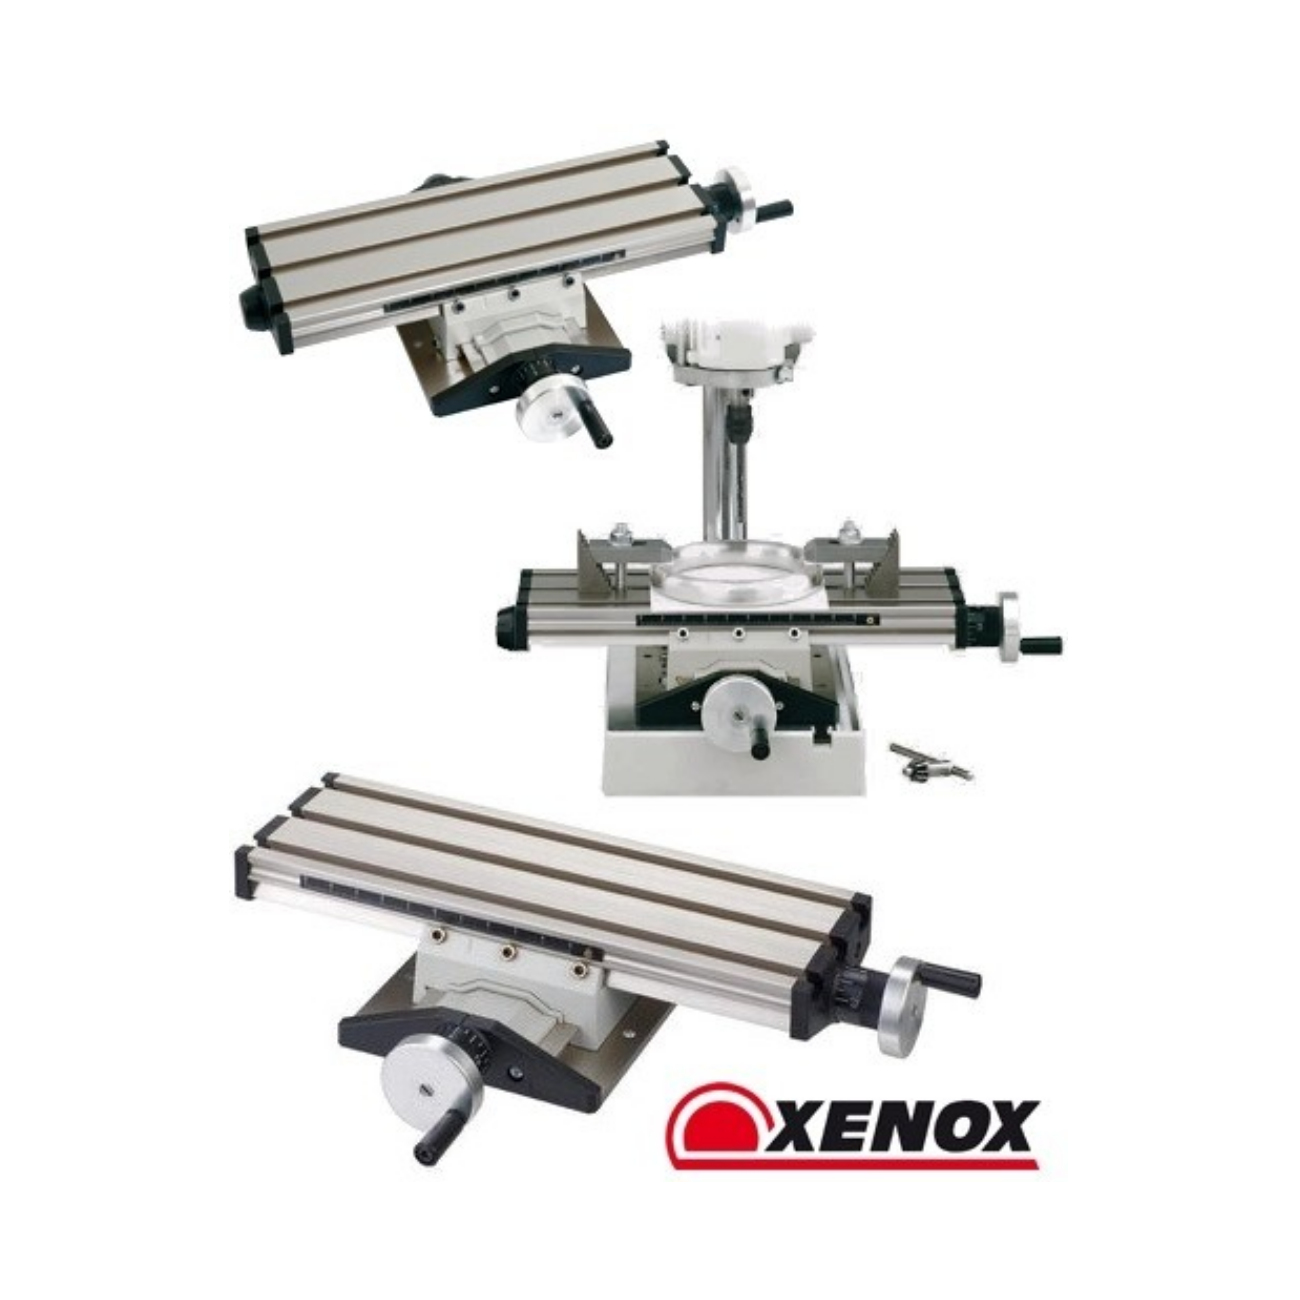 Proxxon Xenox precisie kruiswerk tafel